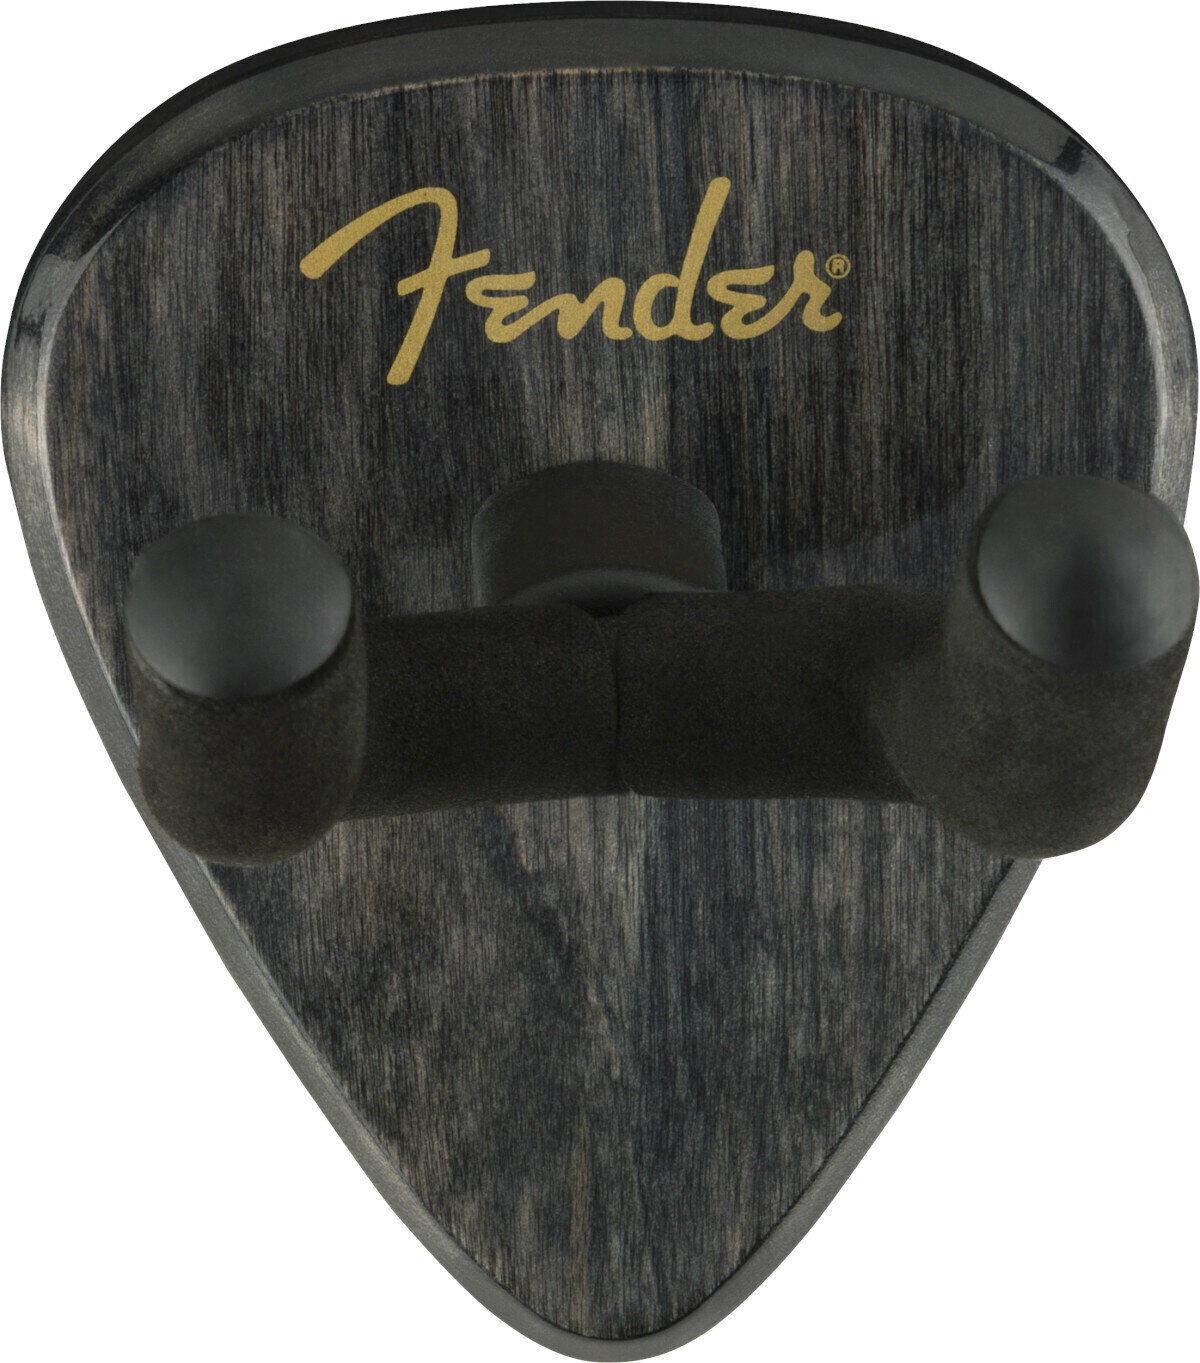 Support de guitare Fender 351 BK Support de guitare